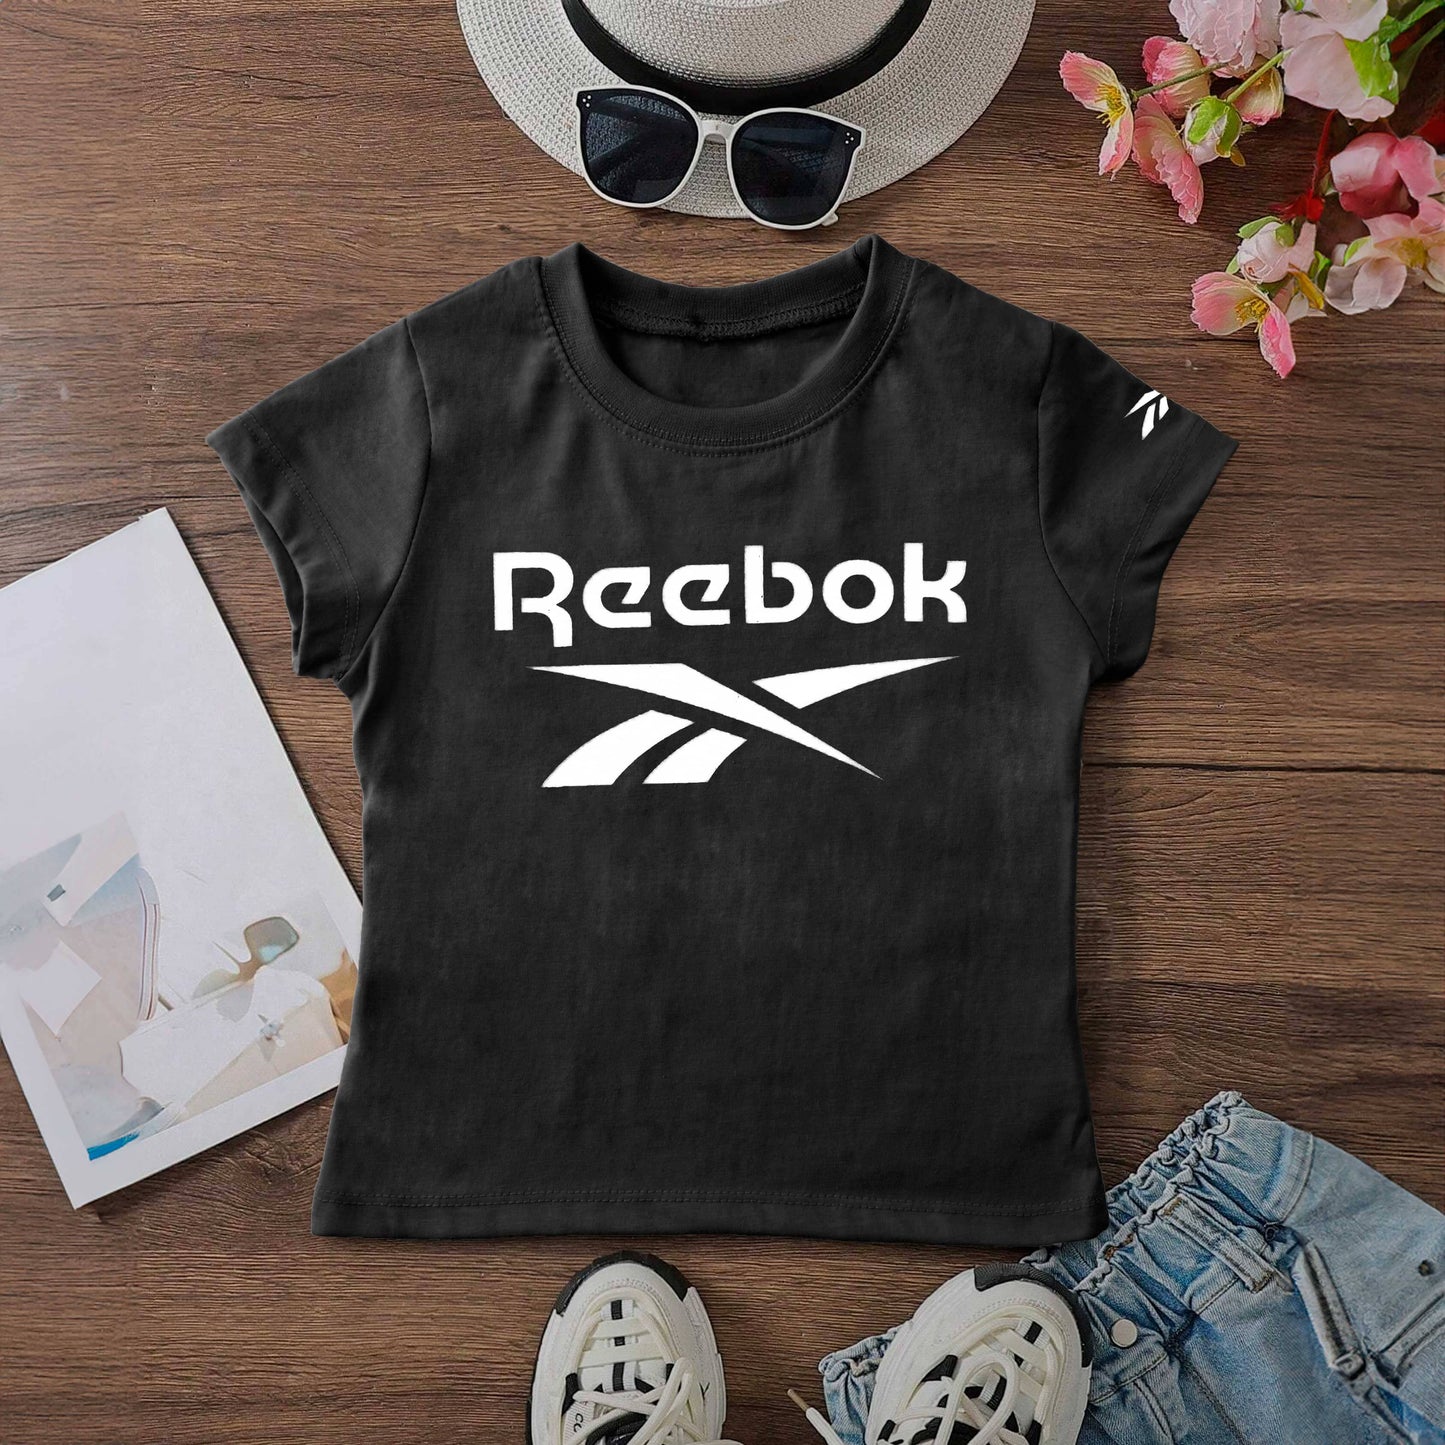 Reebok Kid's Logo Printed Short Sleeve Tee Shirt Kid's Tee Shirt HAS Apparel Black 2 Years 